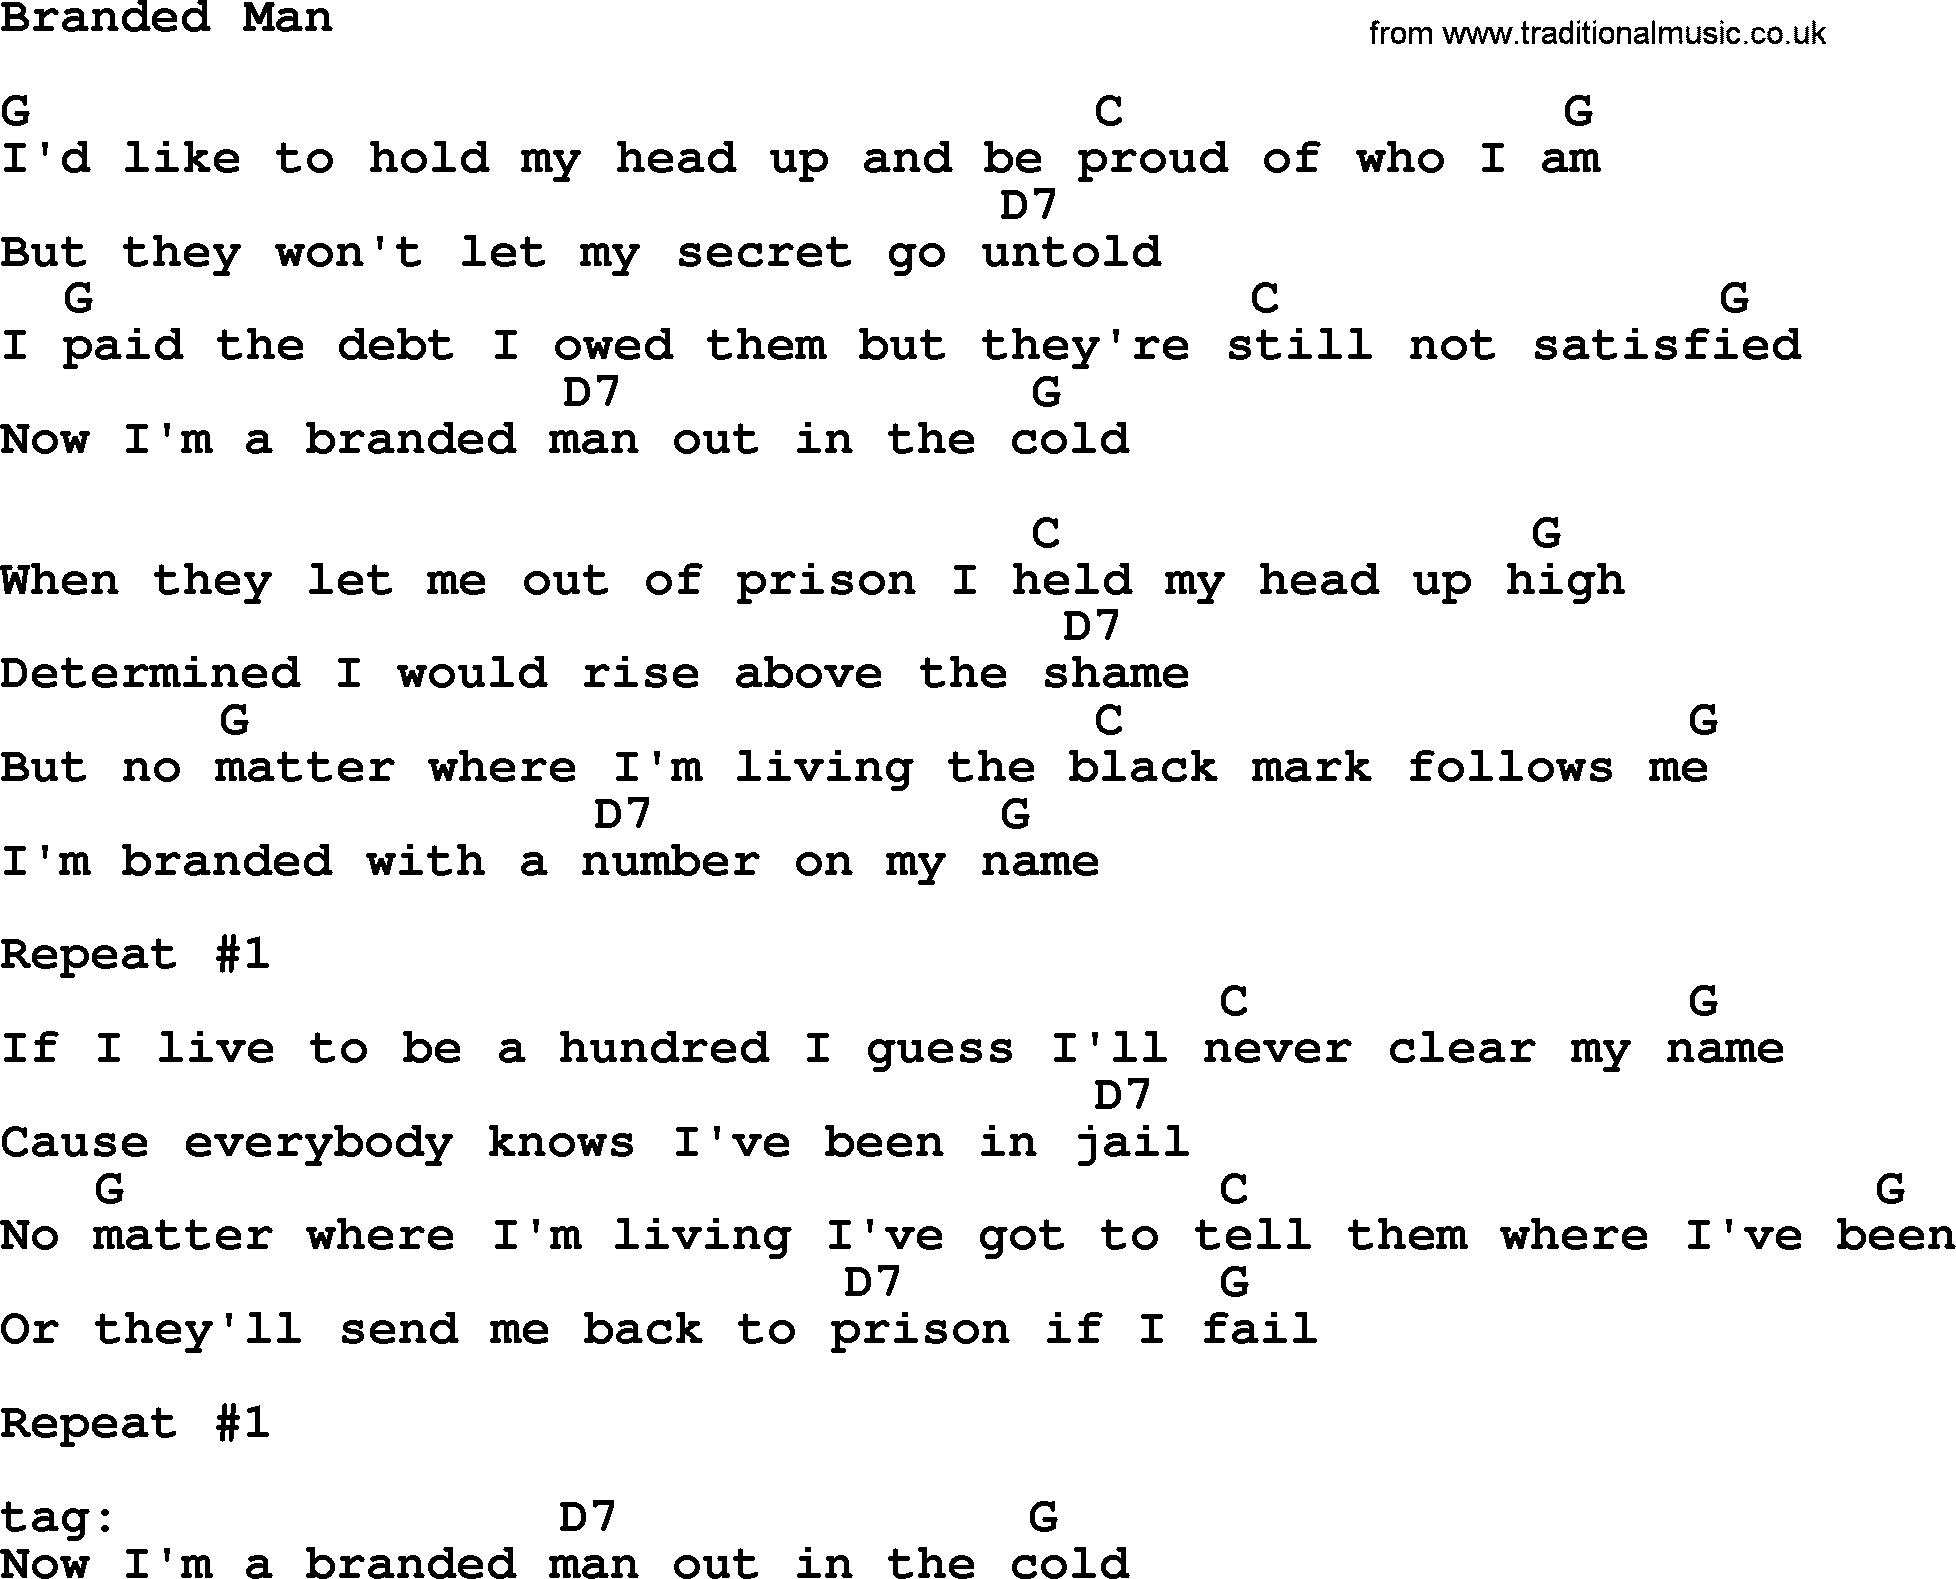 Merle Haggard song: Branded Man, lyrics and chords